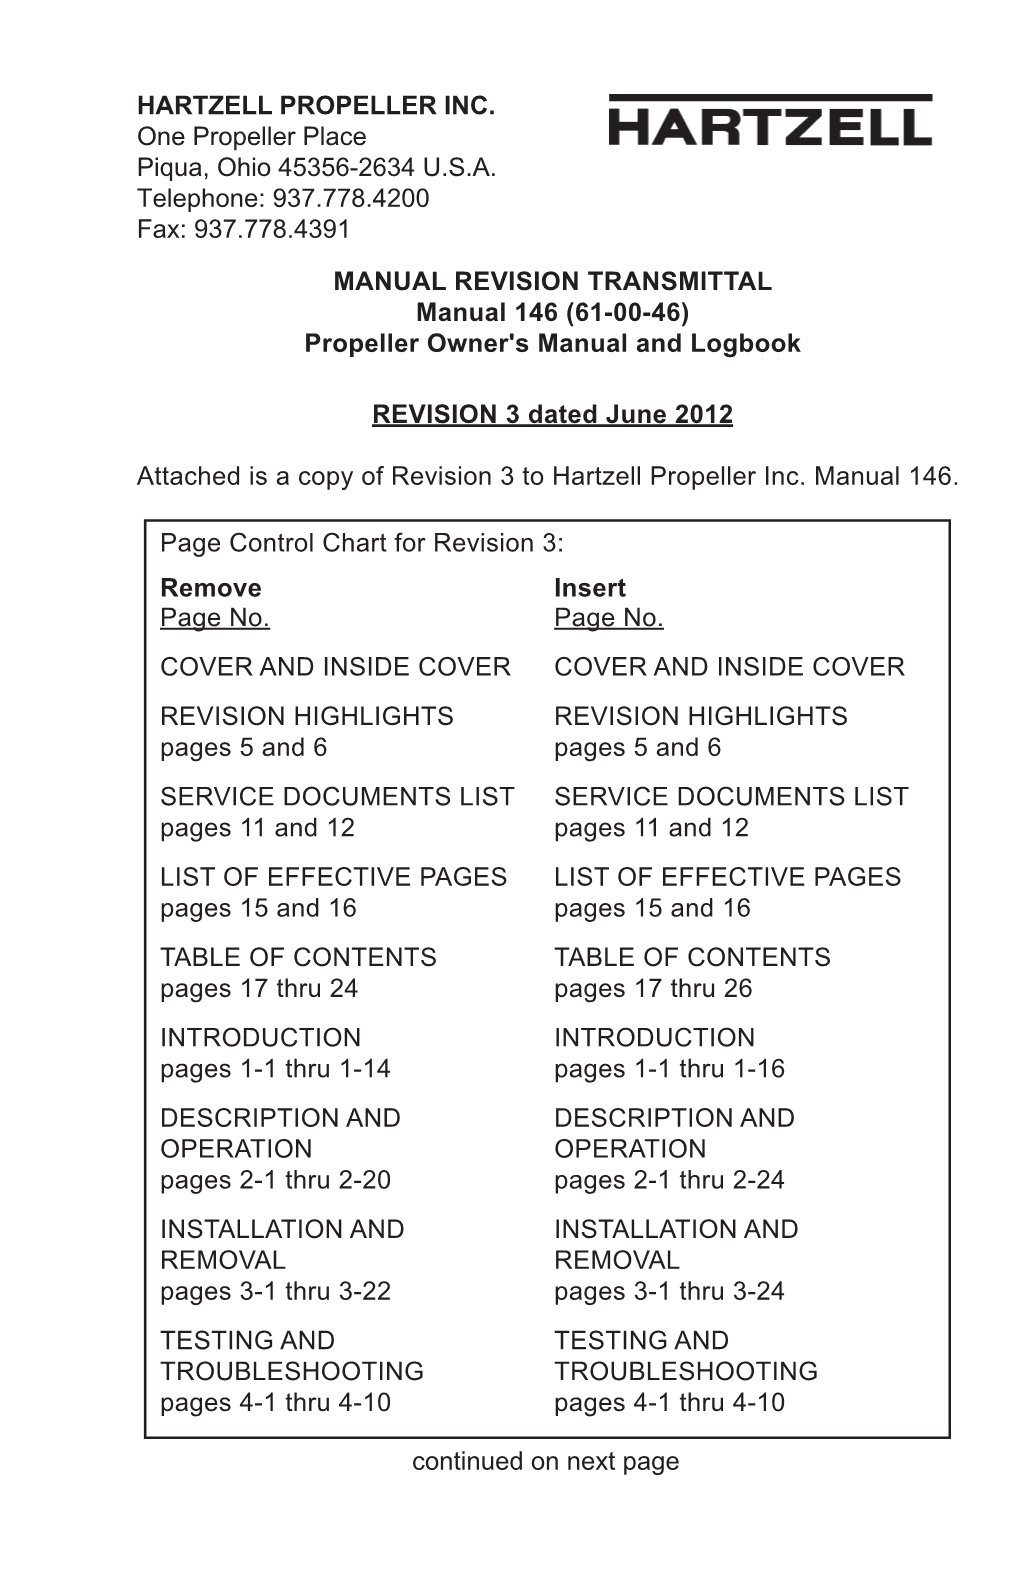 MANUAL REVISION TRANSMITTAL Manual 146 (61-00-46) Propeller Owner's Manual and Logbook